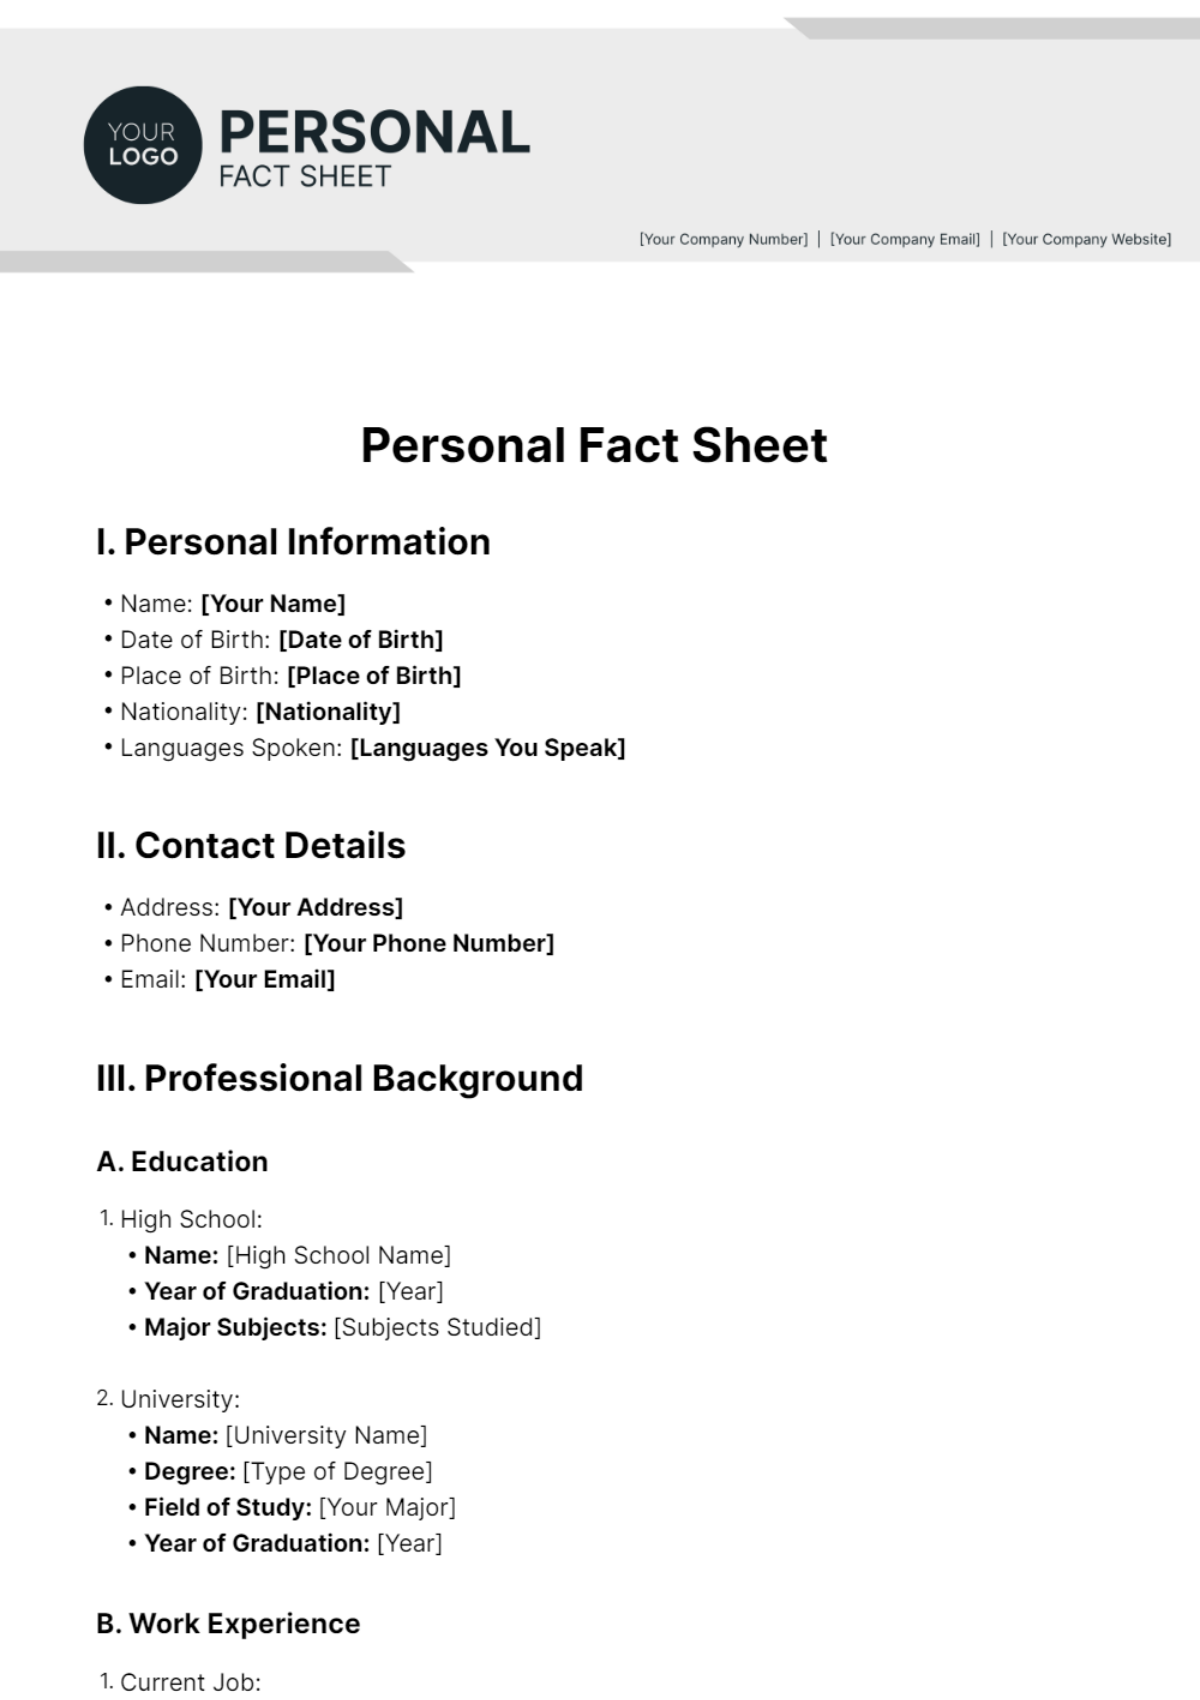 Personal Fact Sheet Template